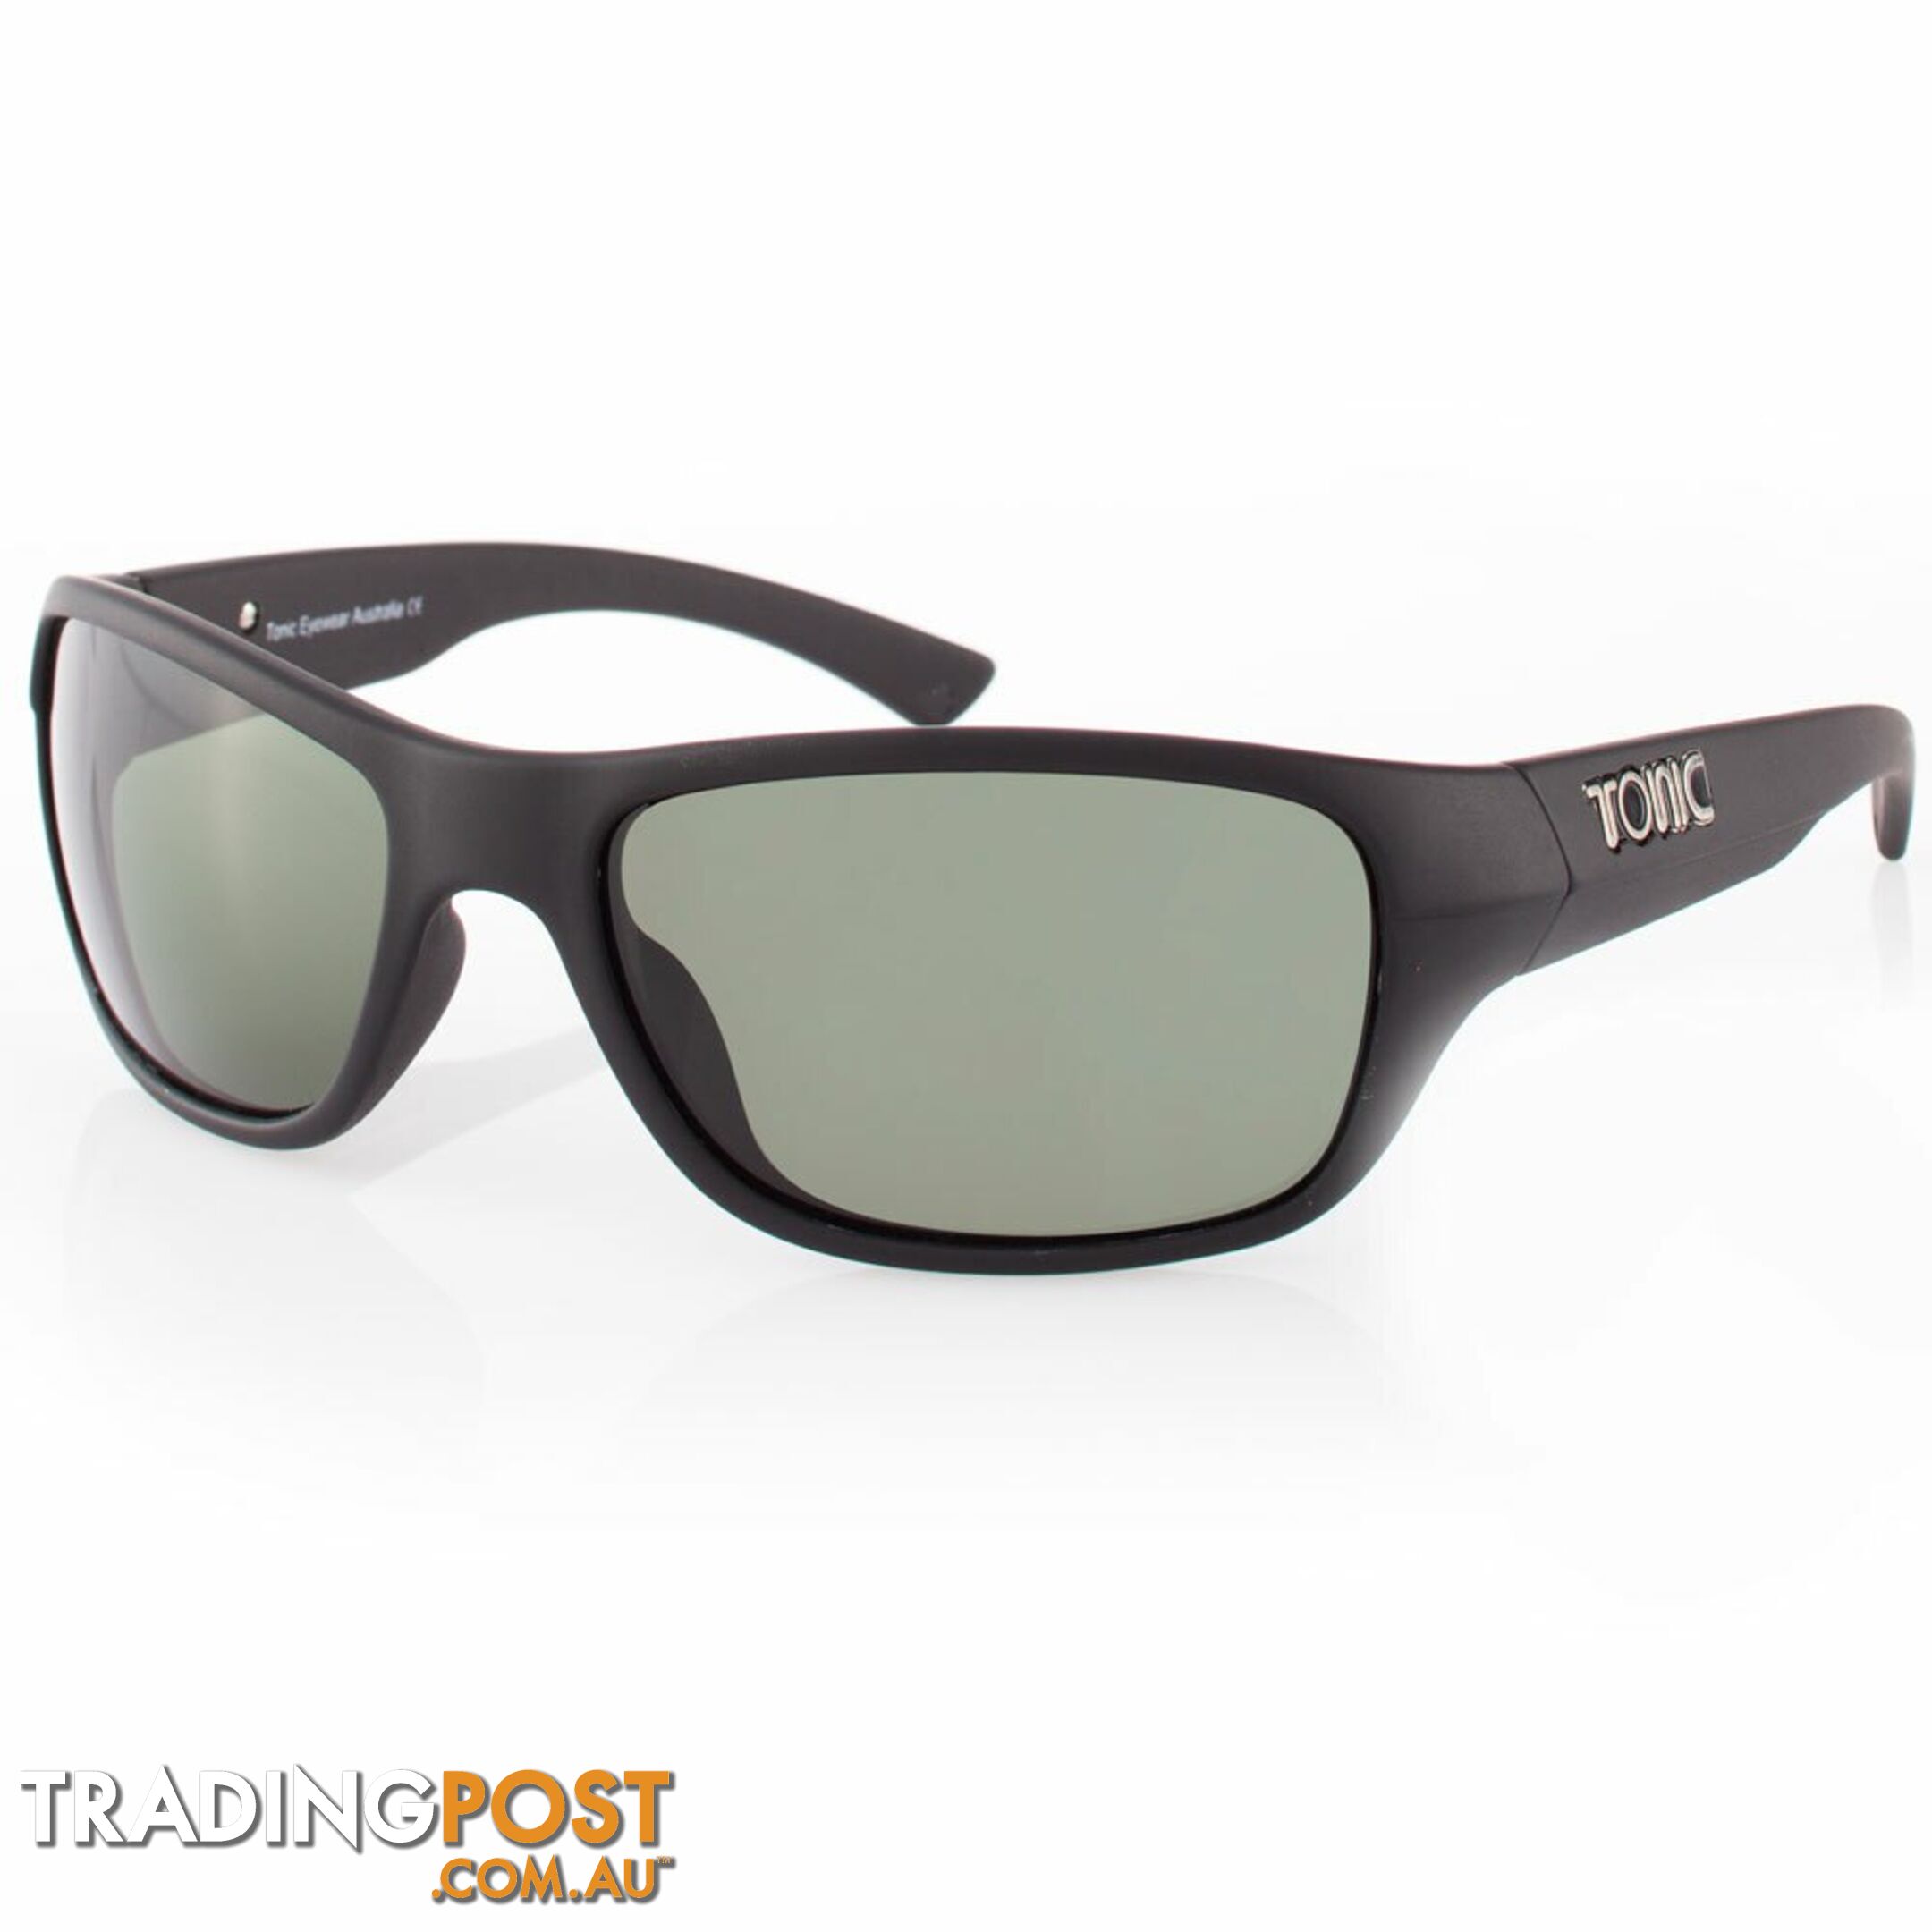 Tonic Rush Sunglasses - RMBS TPS - Tonic Eyewear Sunglasses